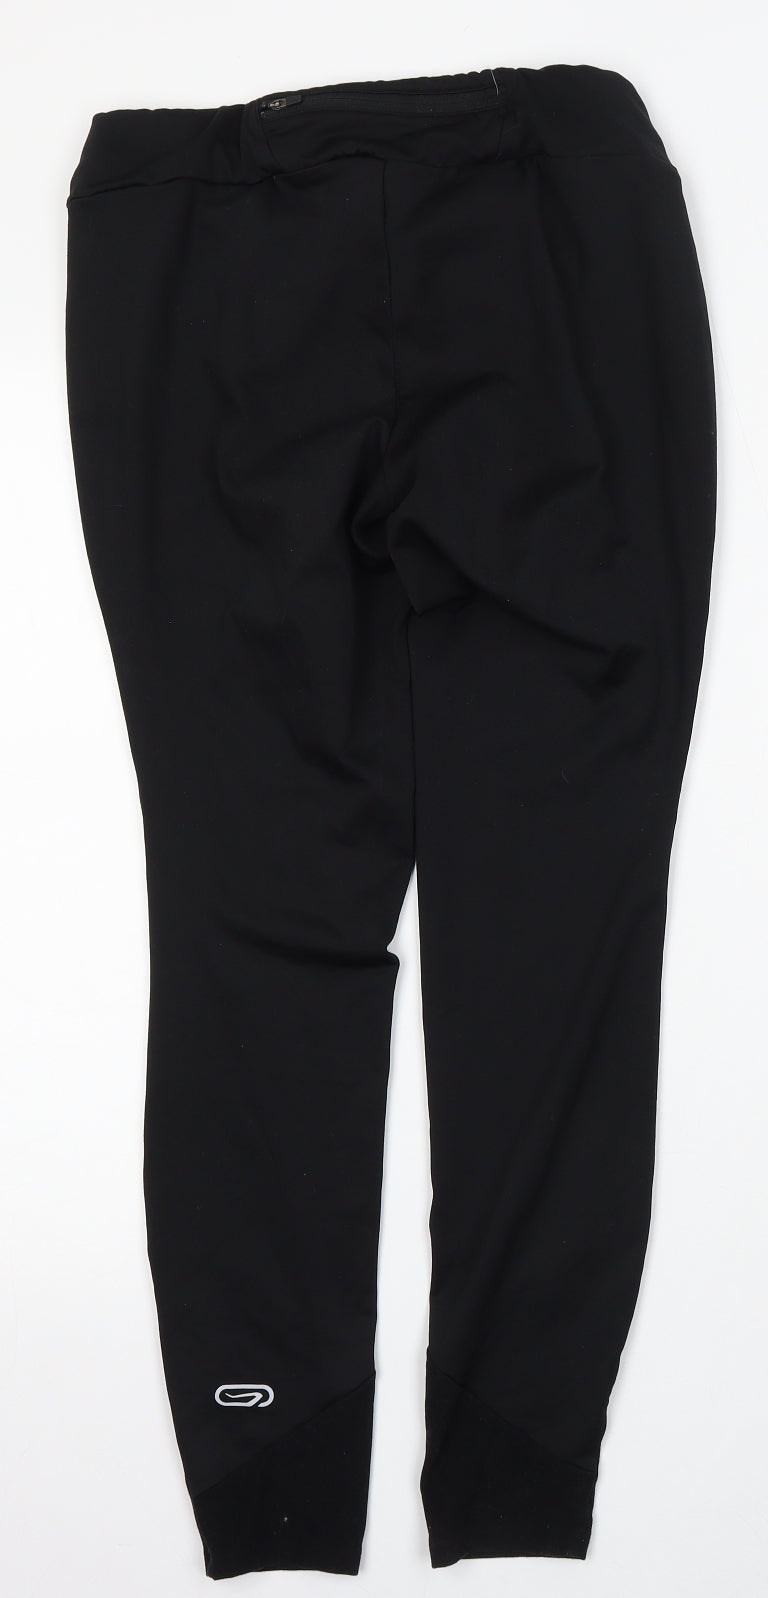 Kalenji Decathlon Black Exercise Athletic Workout Pants With Pocket Size  Small | eBay